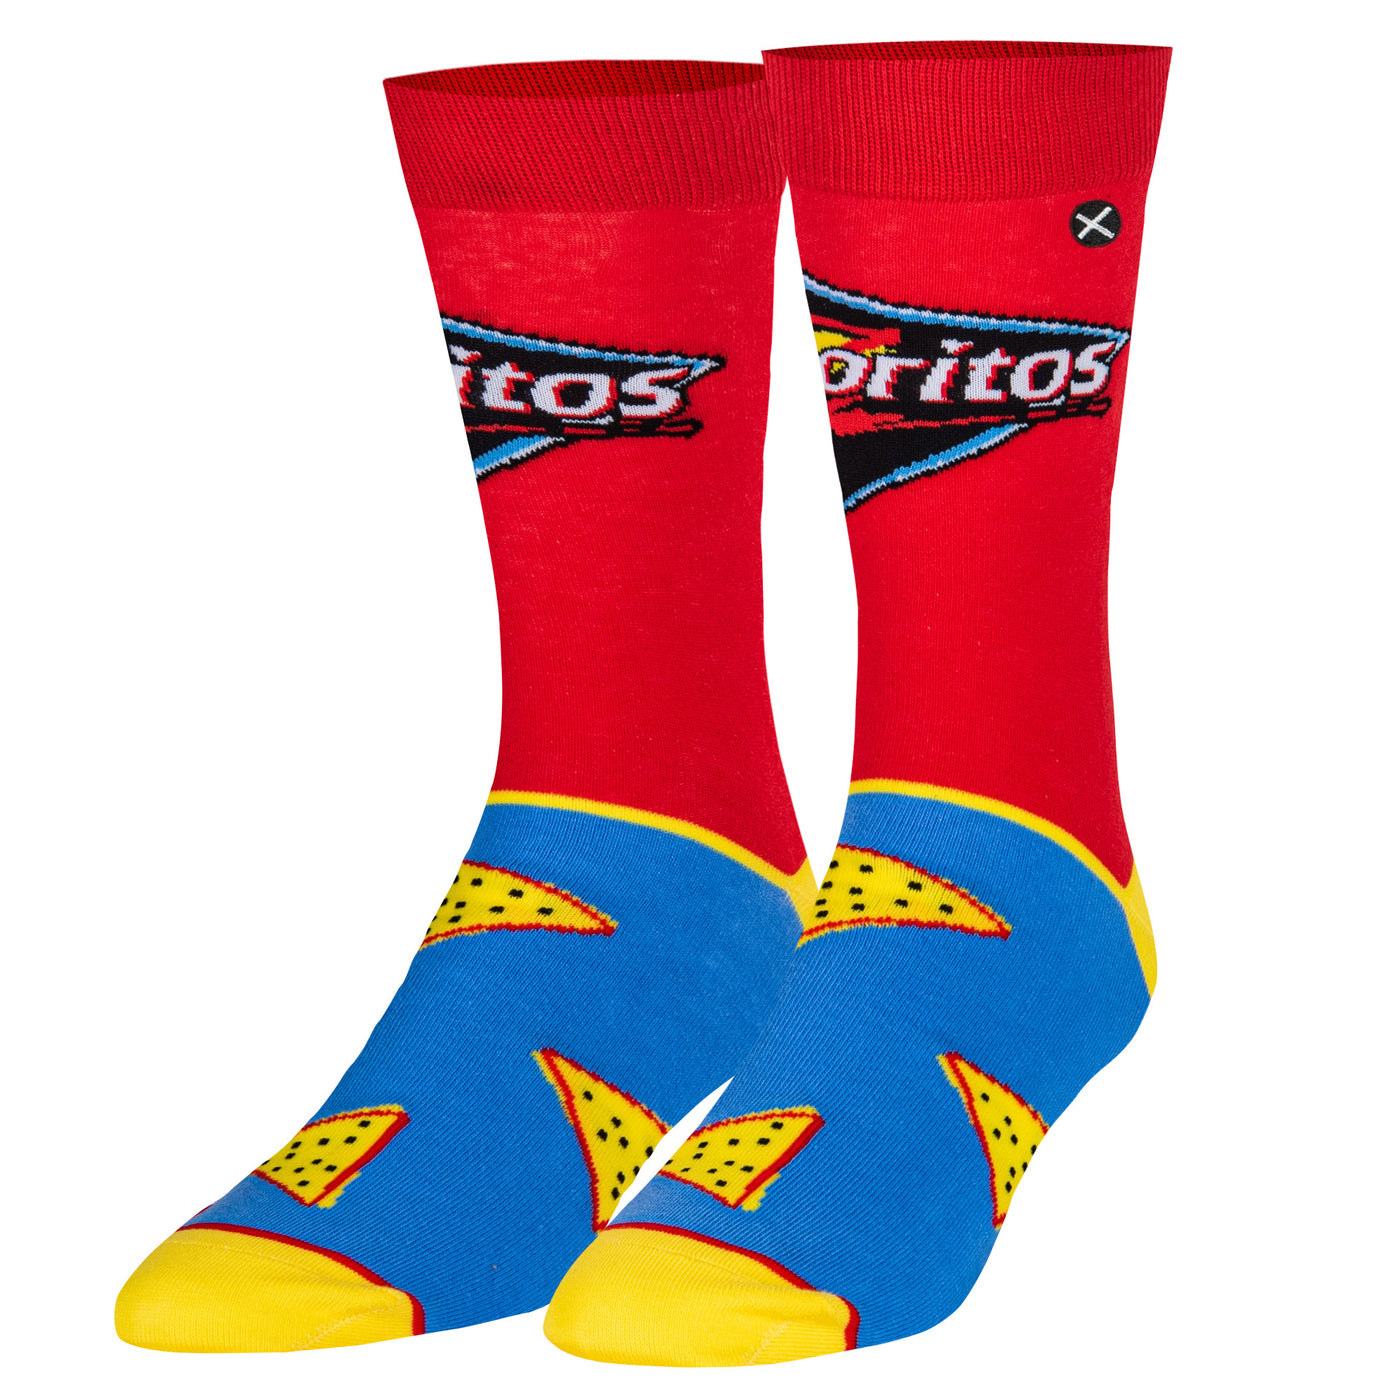 Doritos 2000 Crew Socks